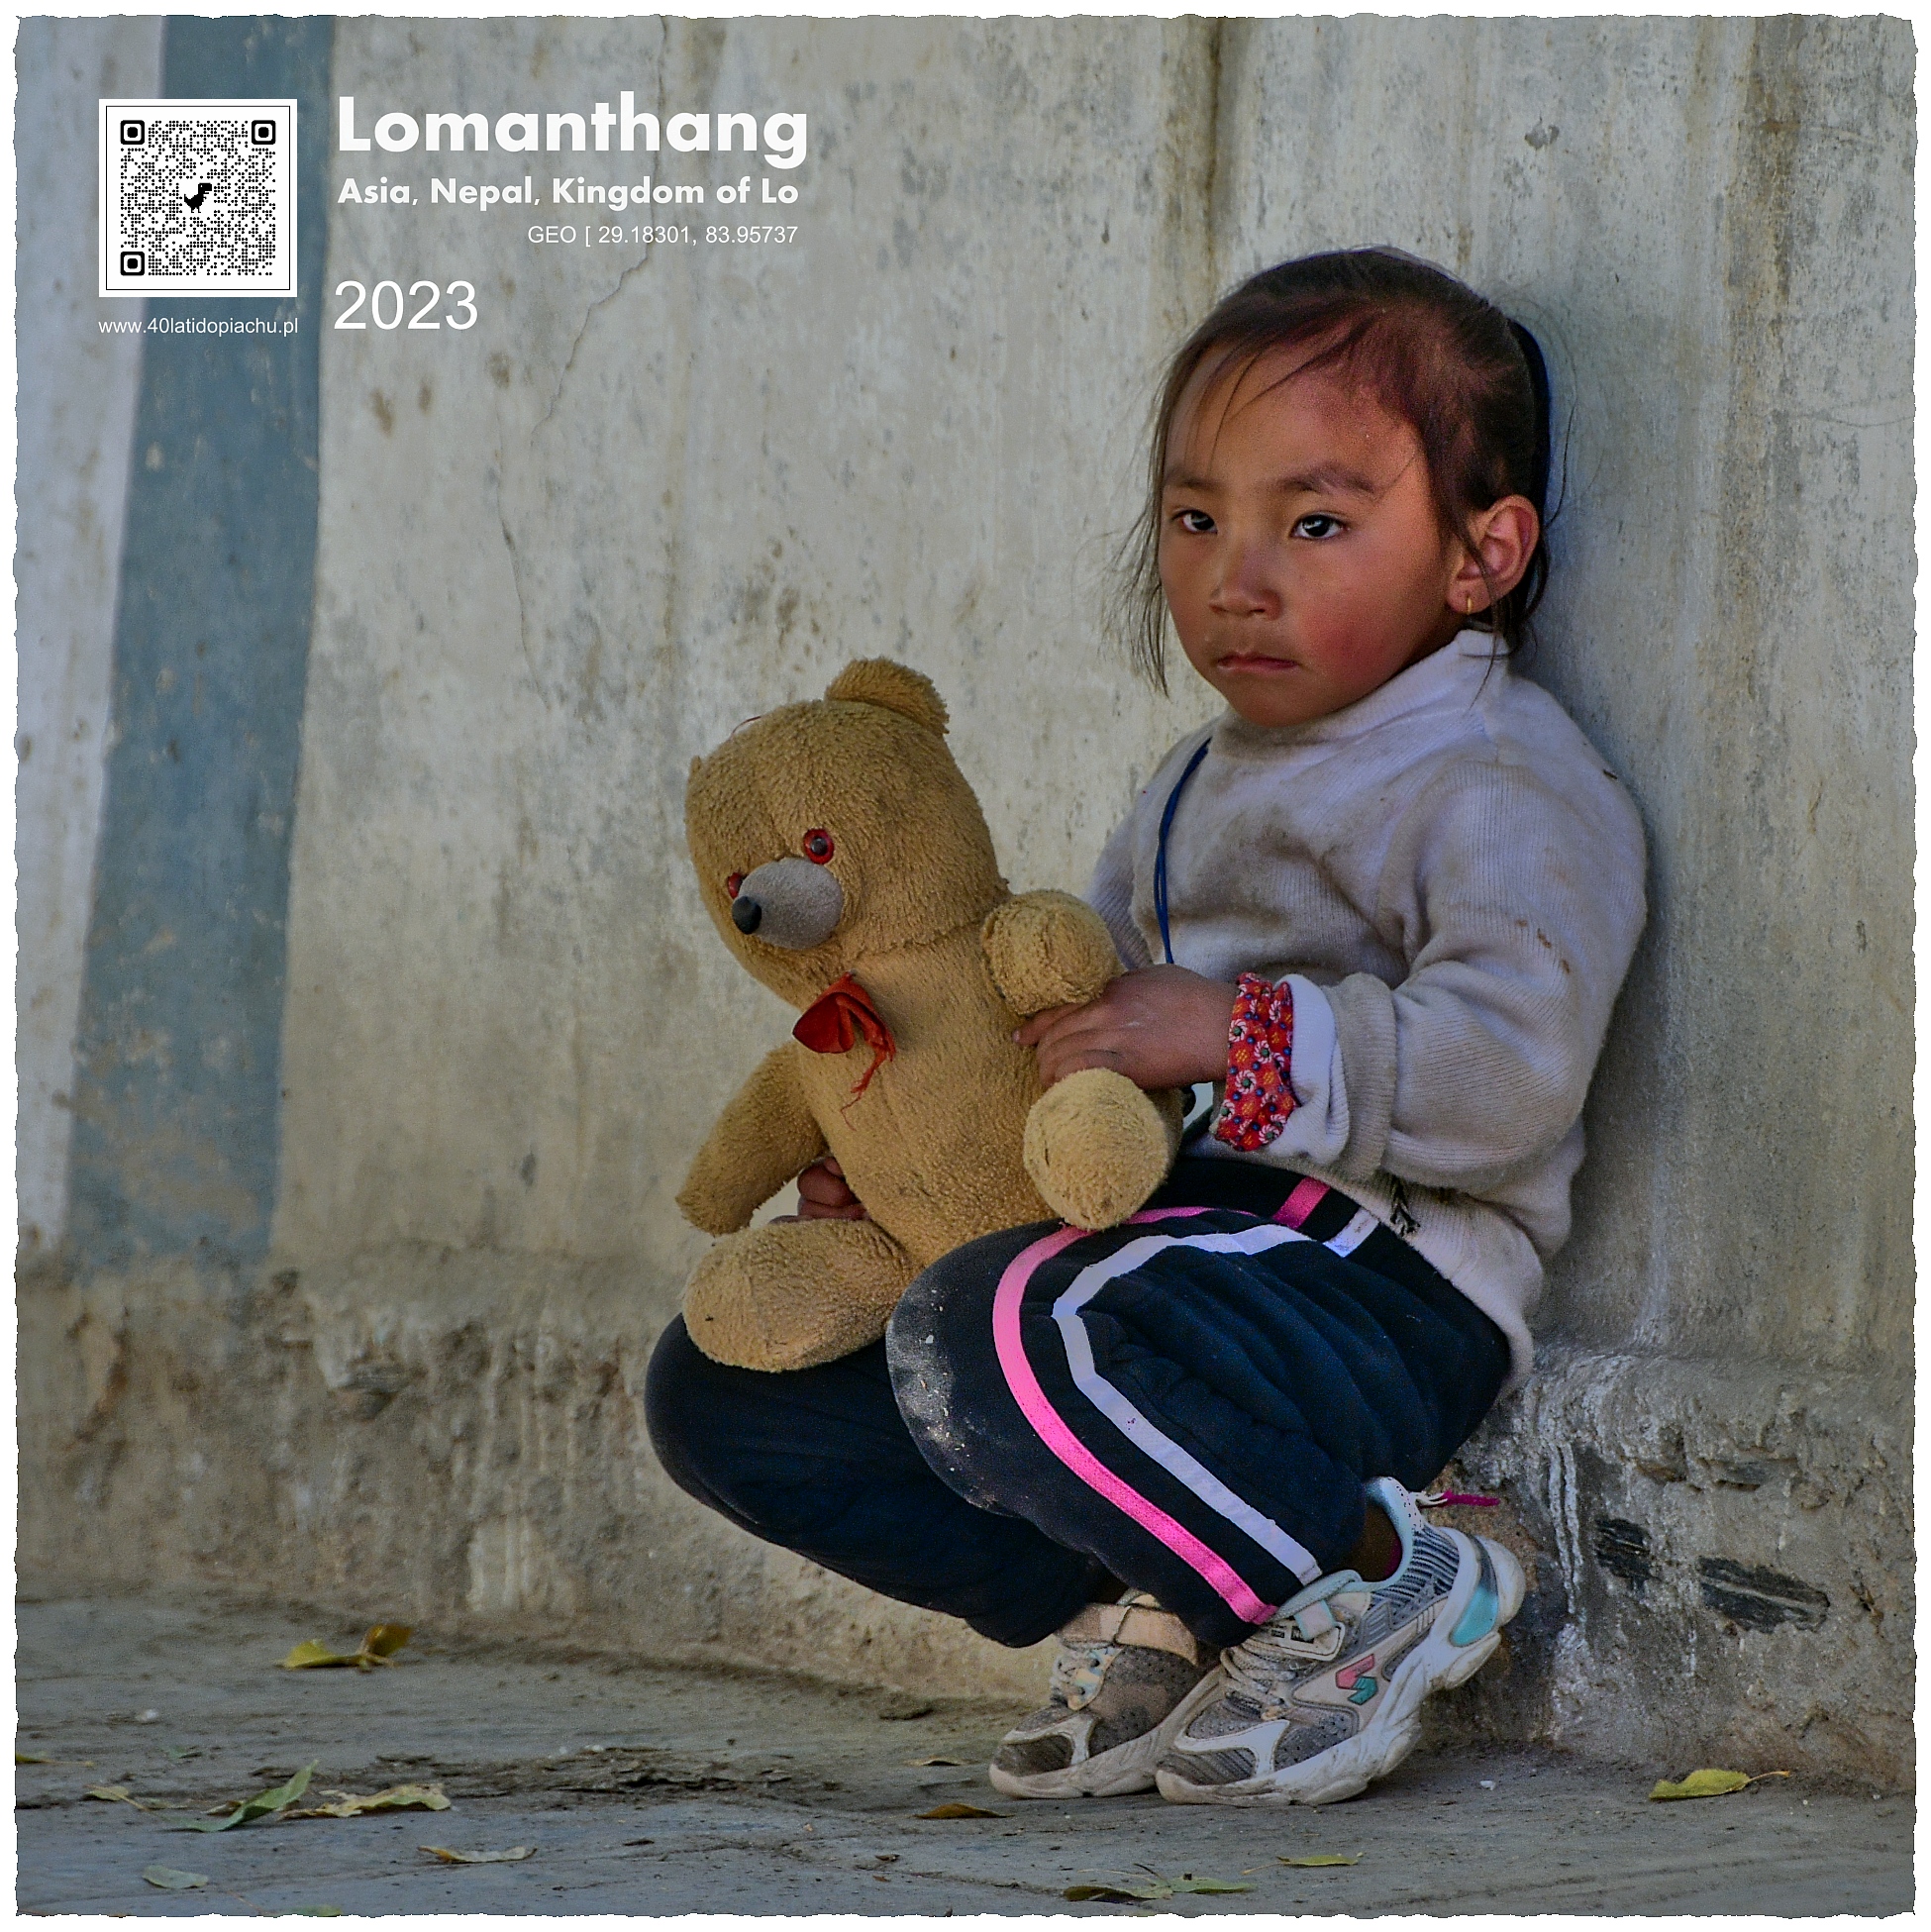 Nepal mieszkańcy miasta Lomanthang